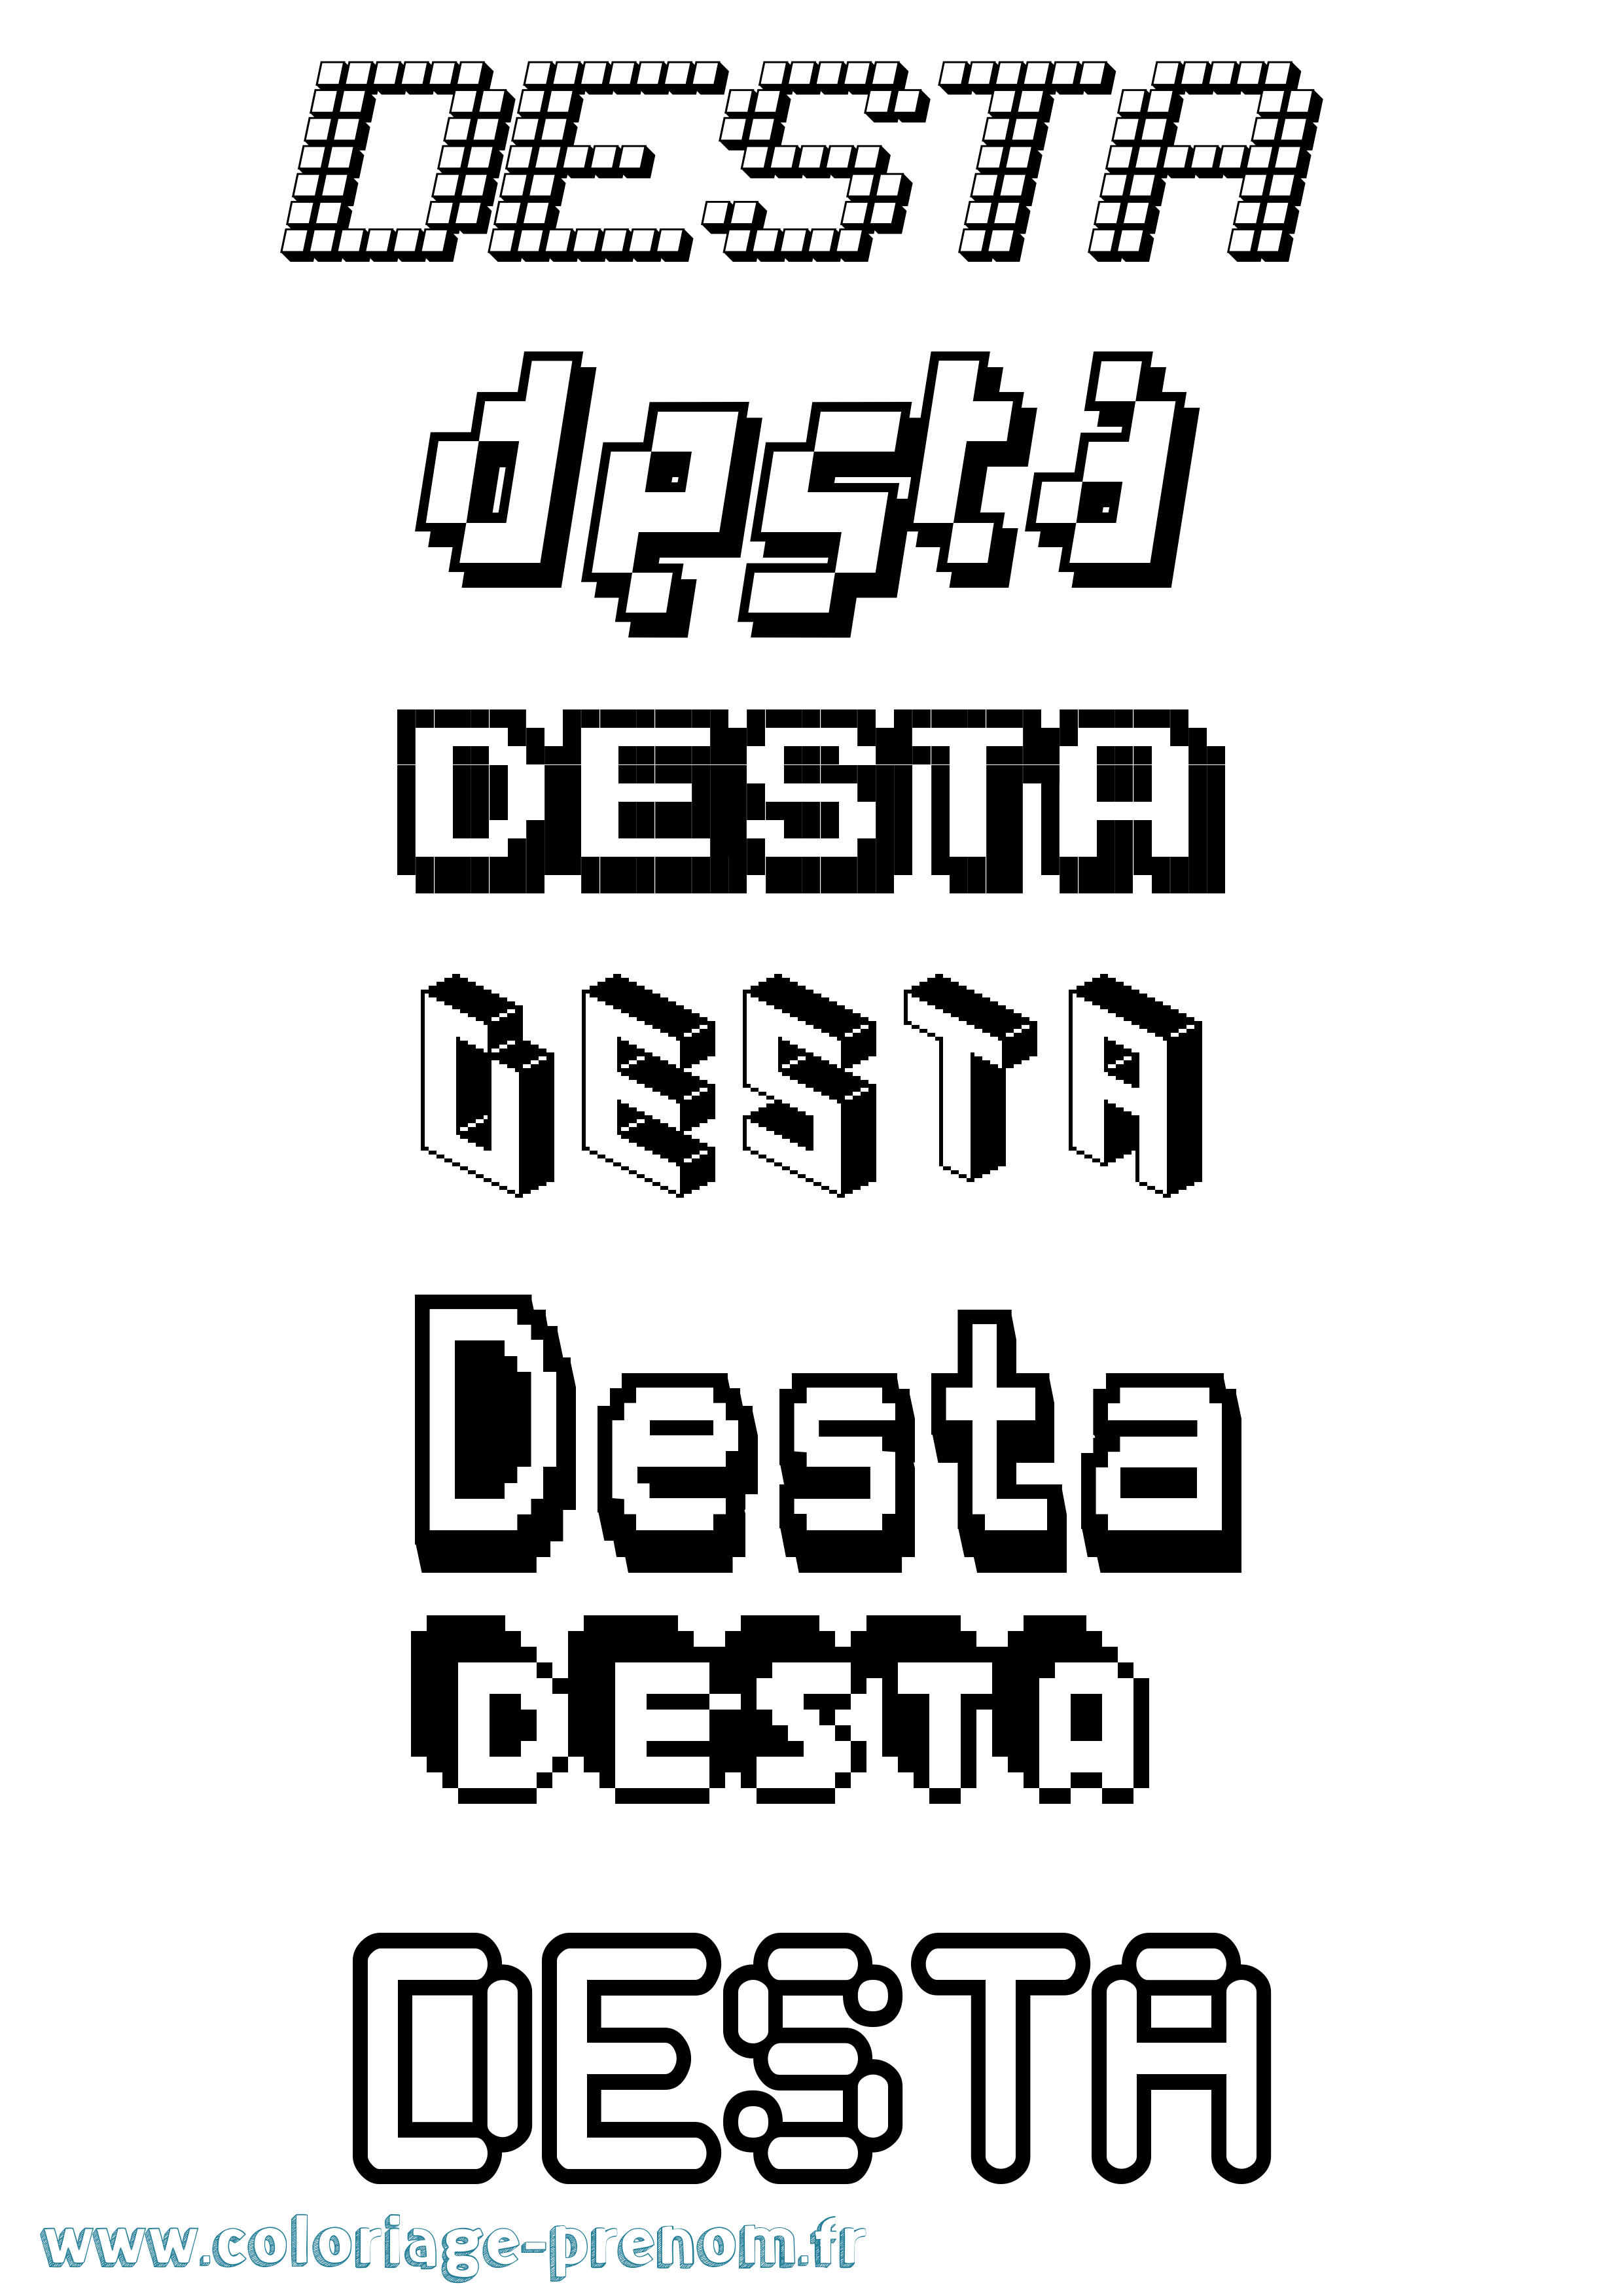 Coloriage prénom Desta Pixel